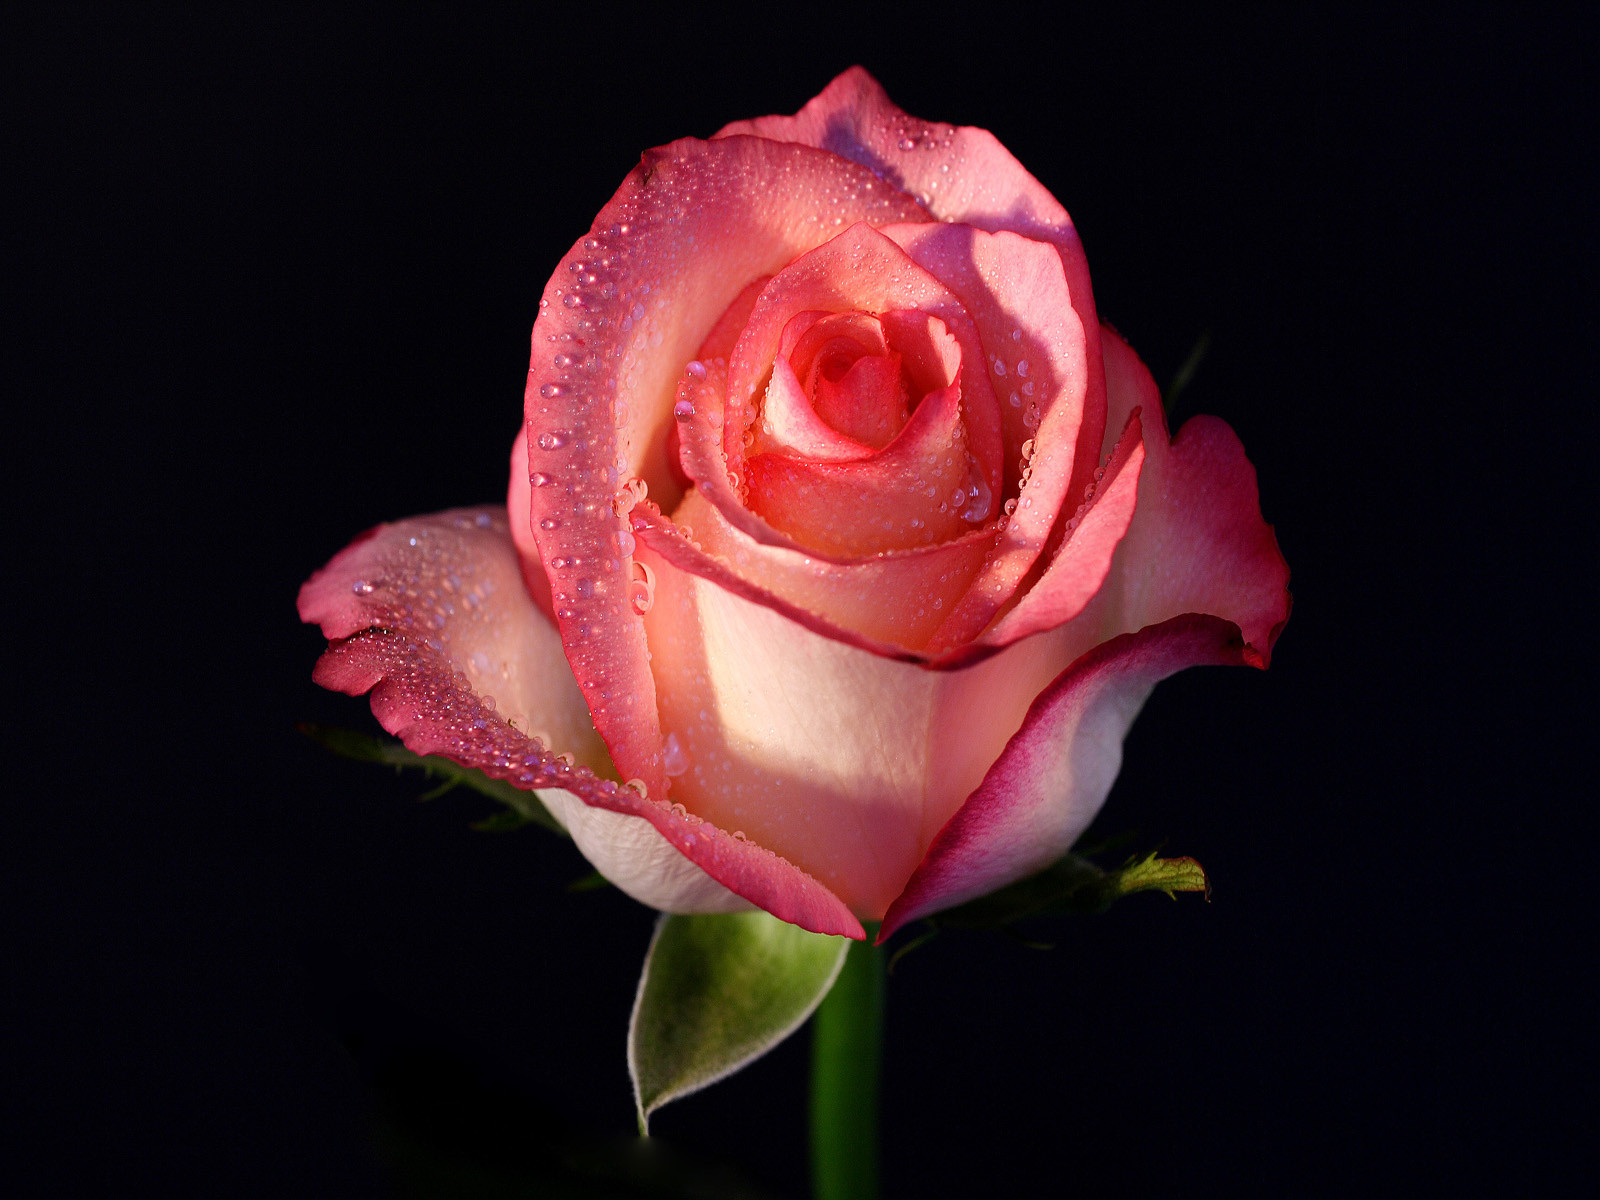 Rose flower images free download hd Download